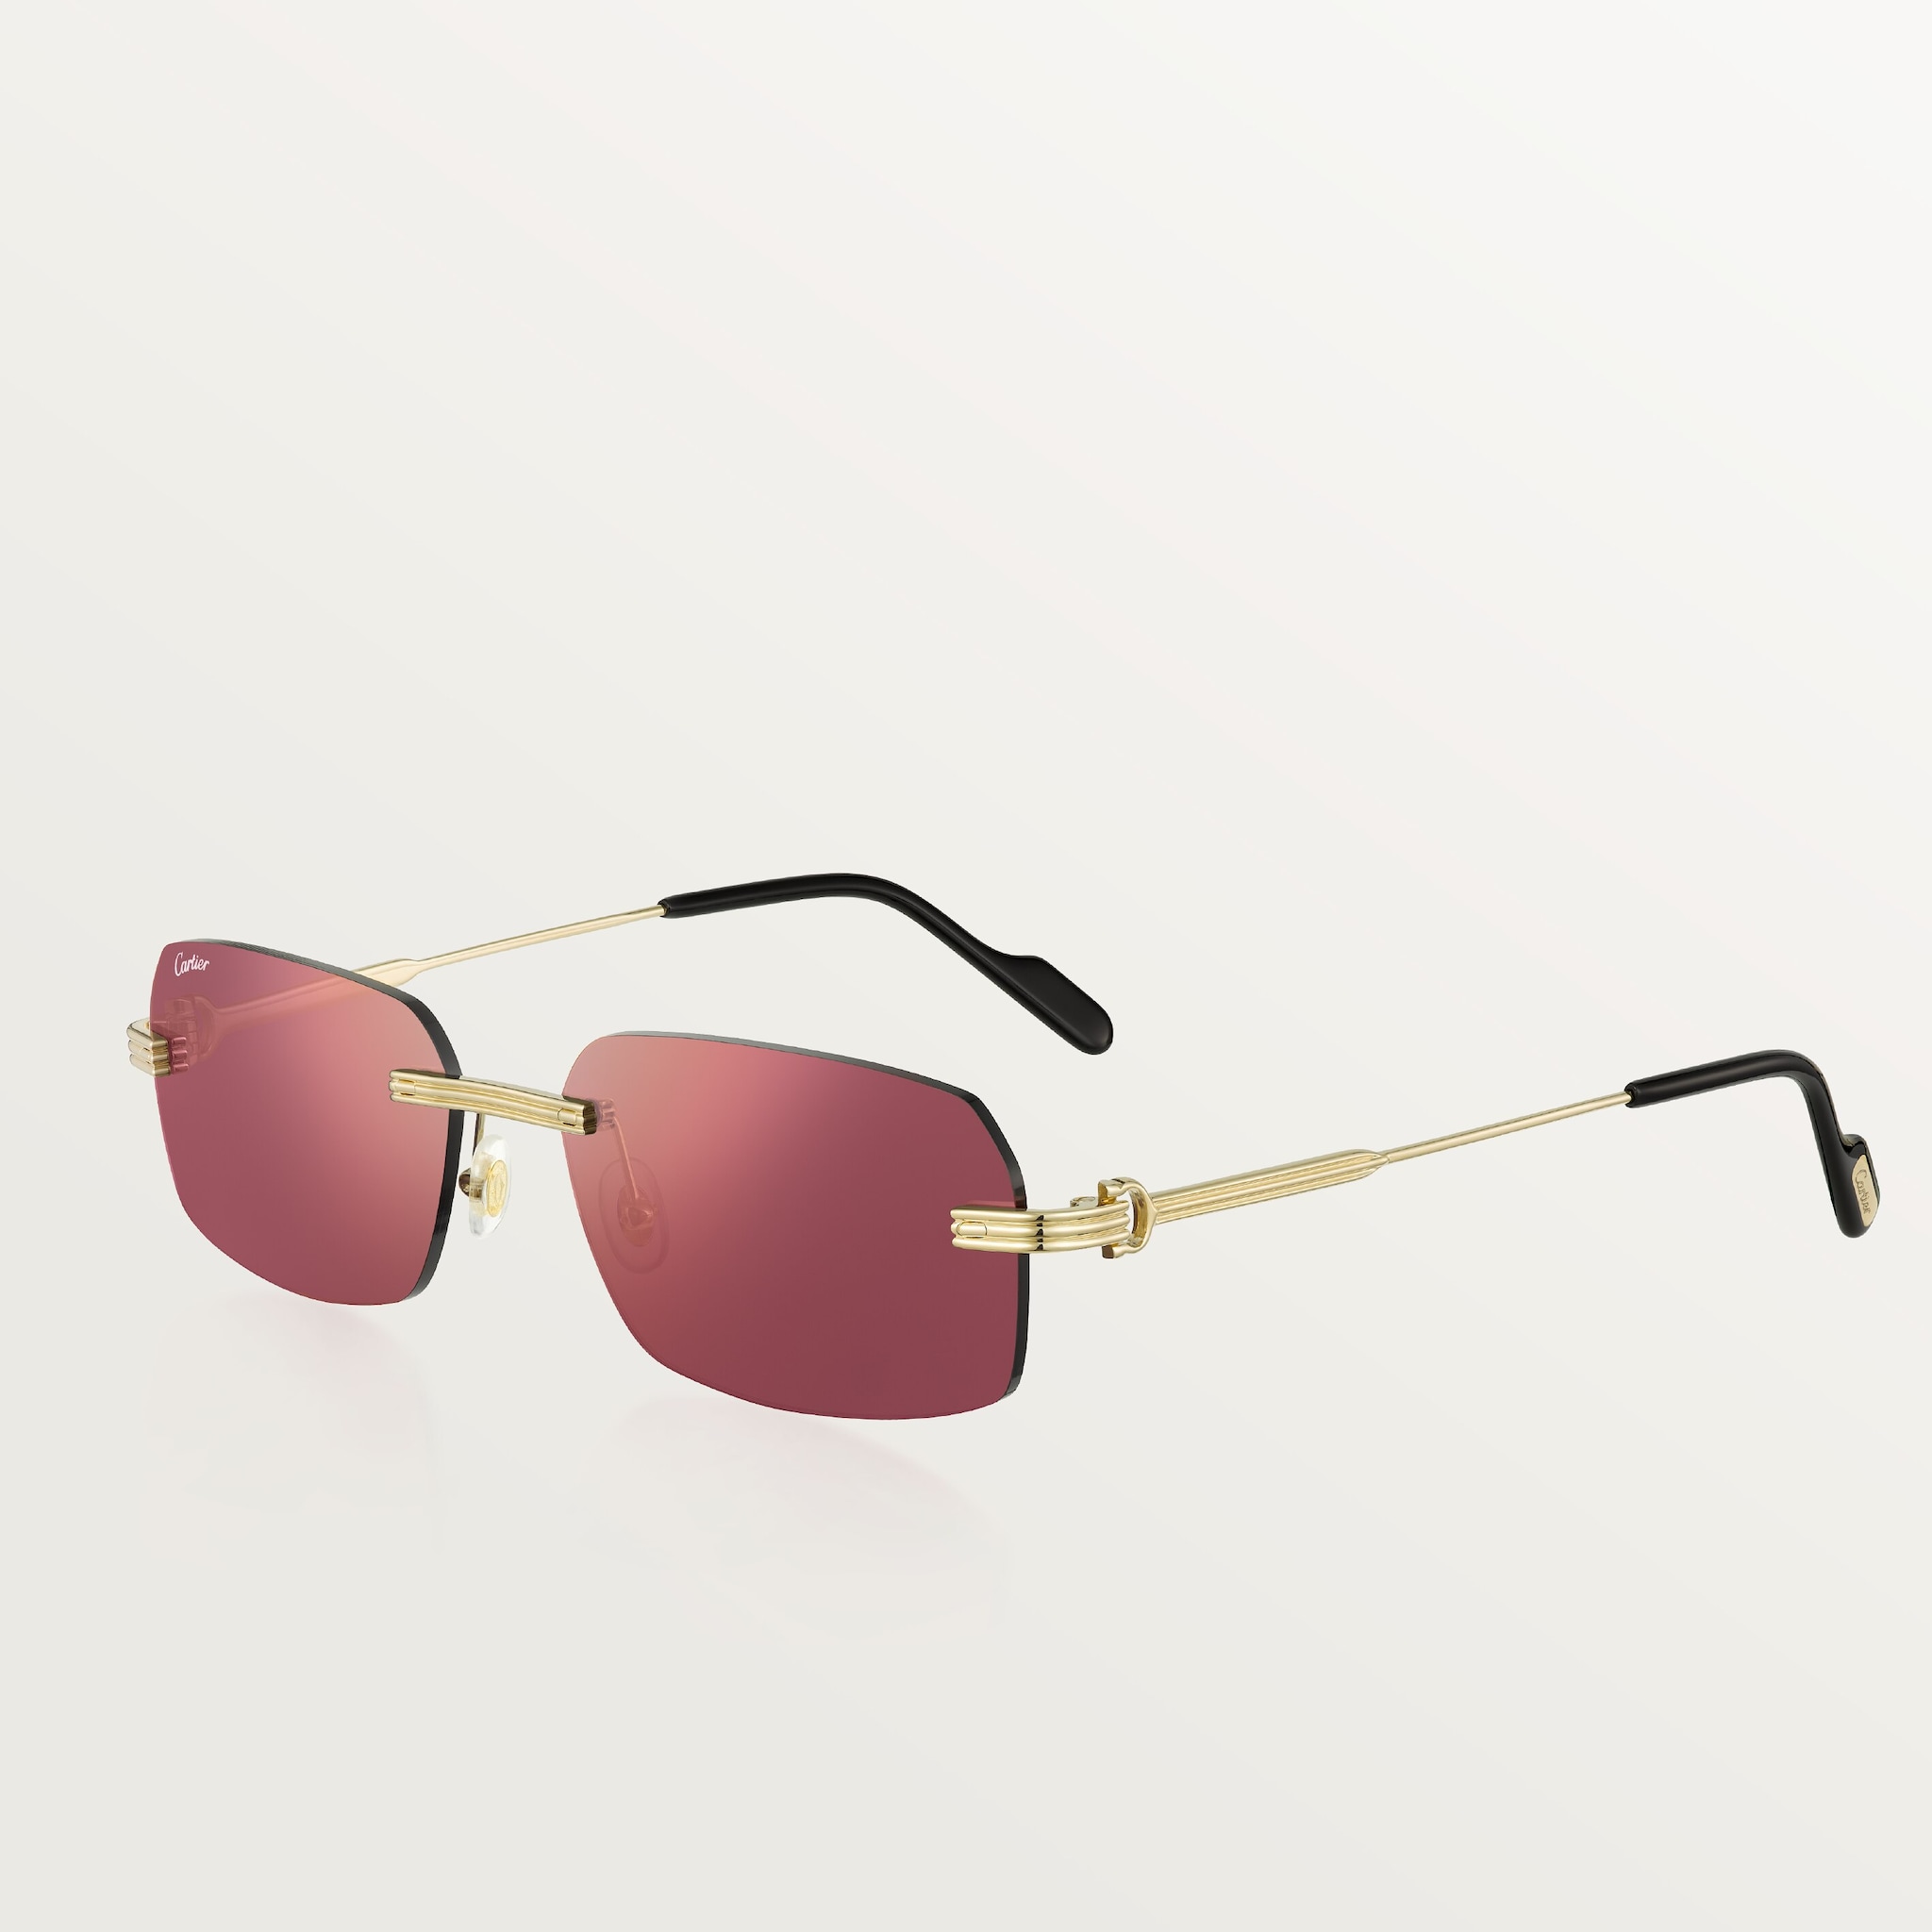 Première de Cartier 太陽眼鏡光滑金色飾面金屬，酒紅色鏡片